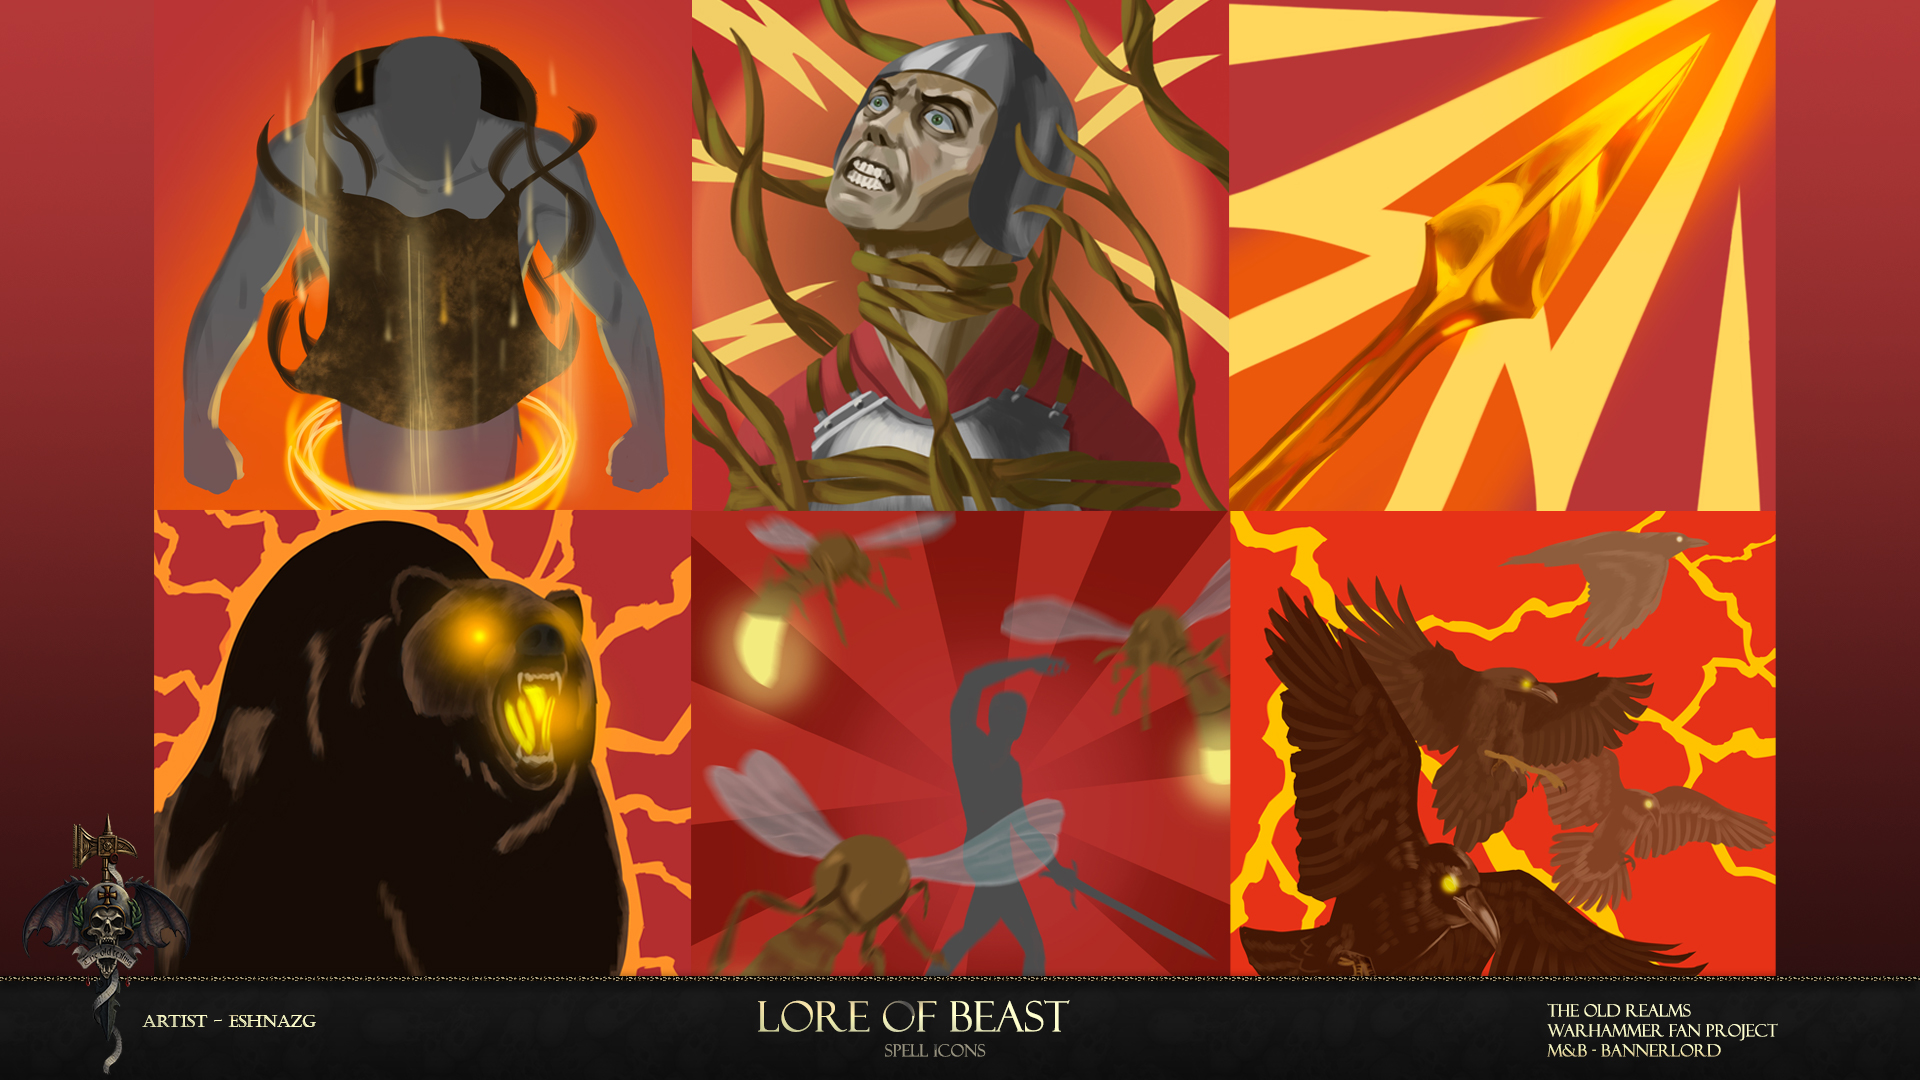 Lore of beast01